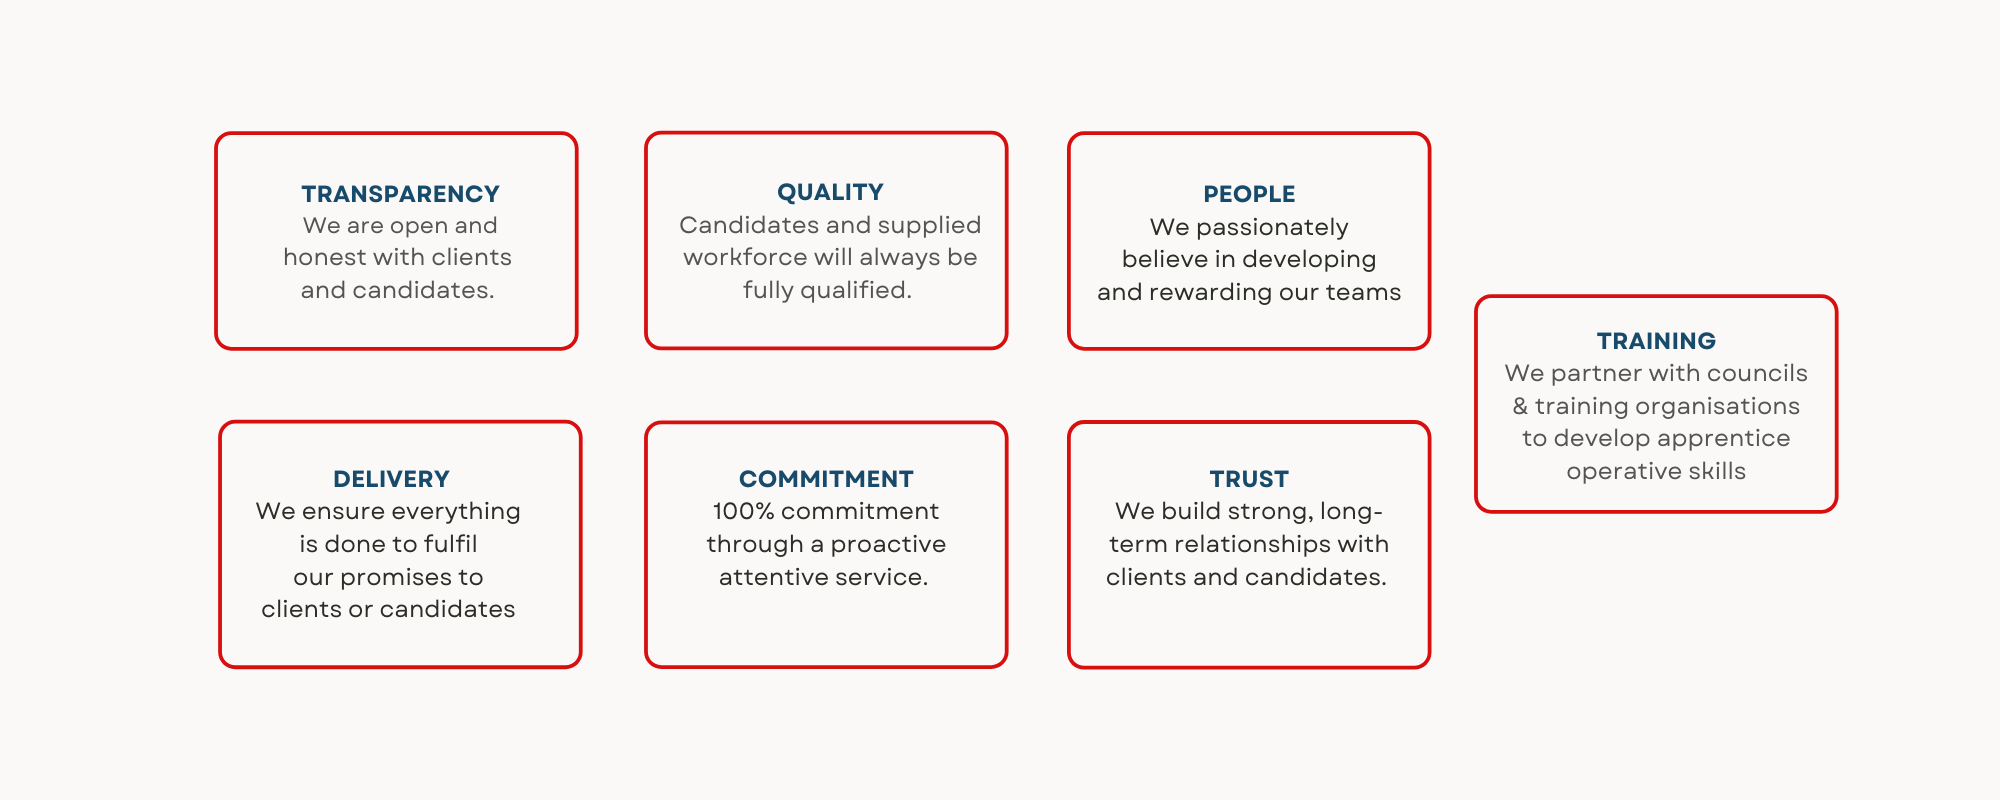 3D Personnel About Us - Construction Employment Agency - Our Values